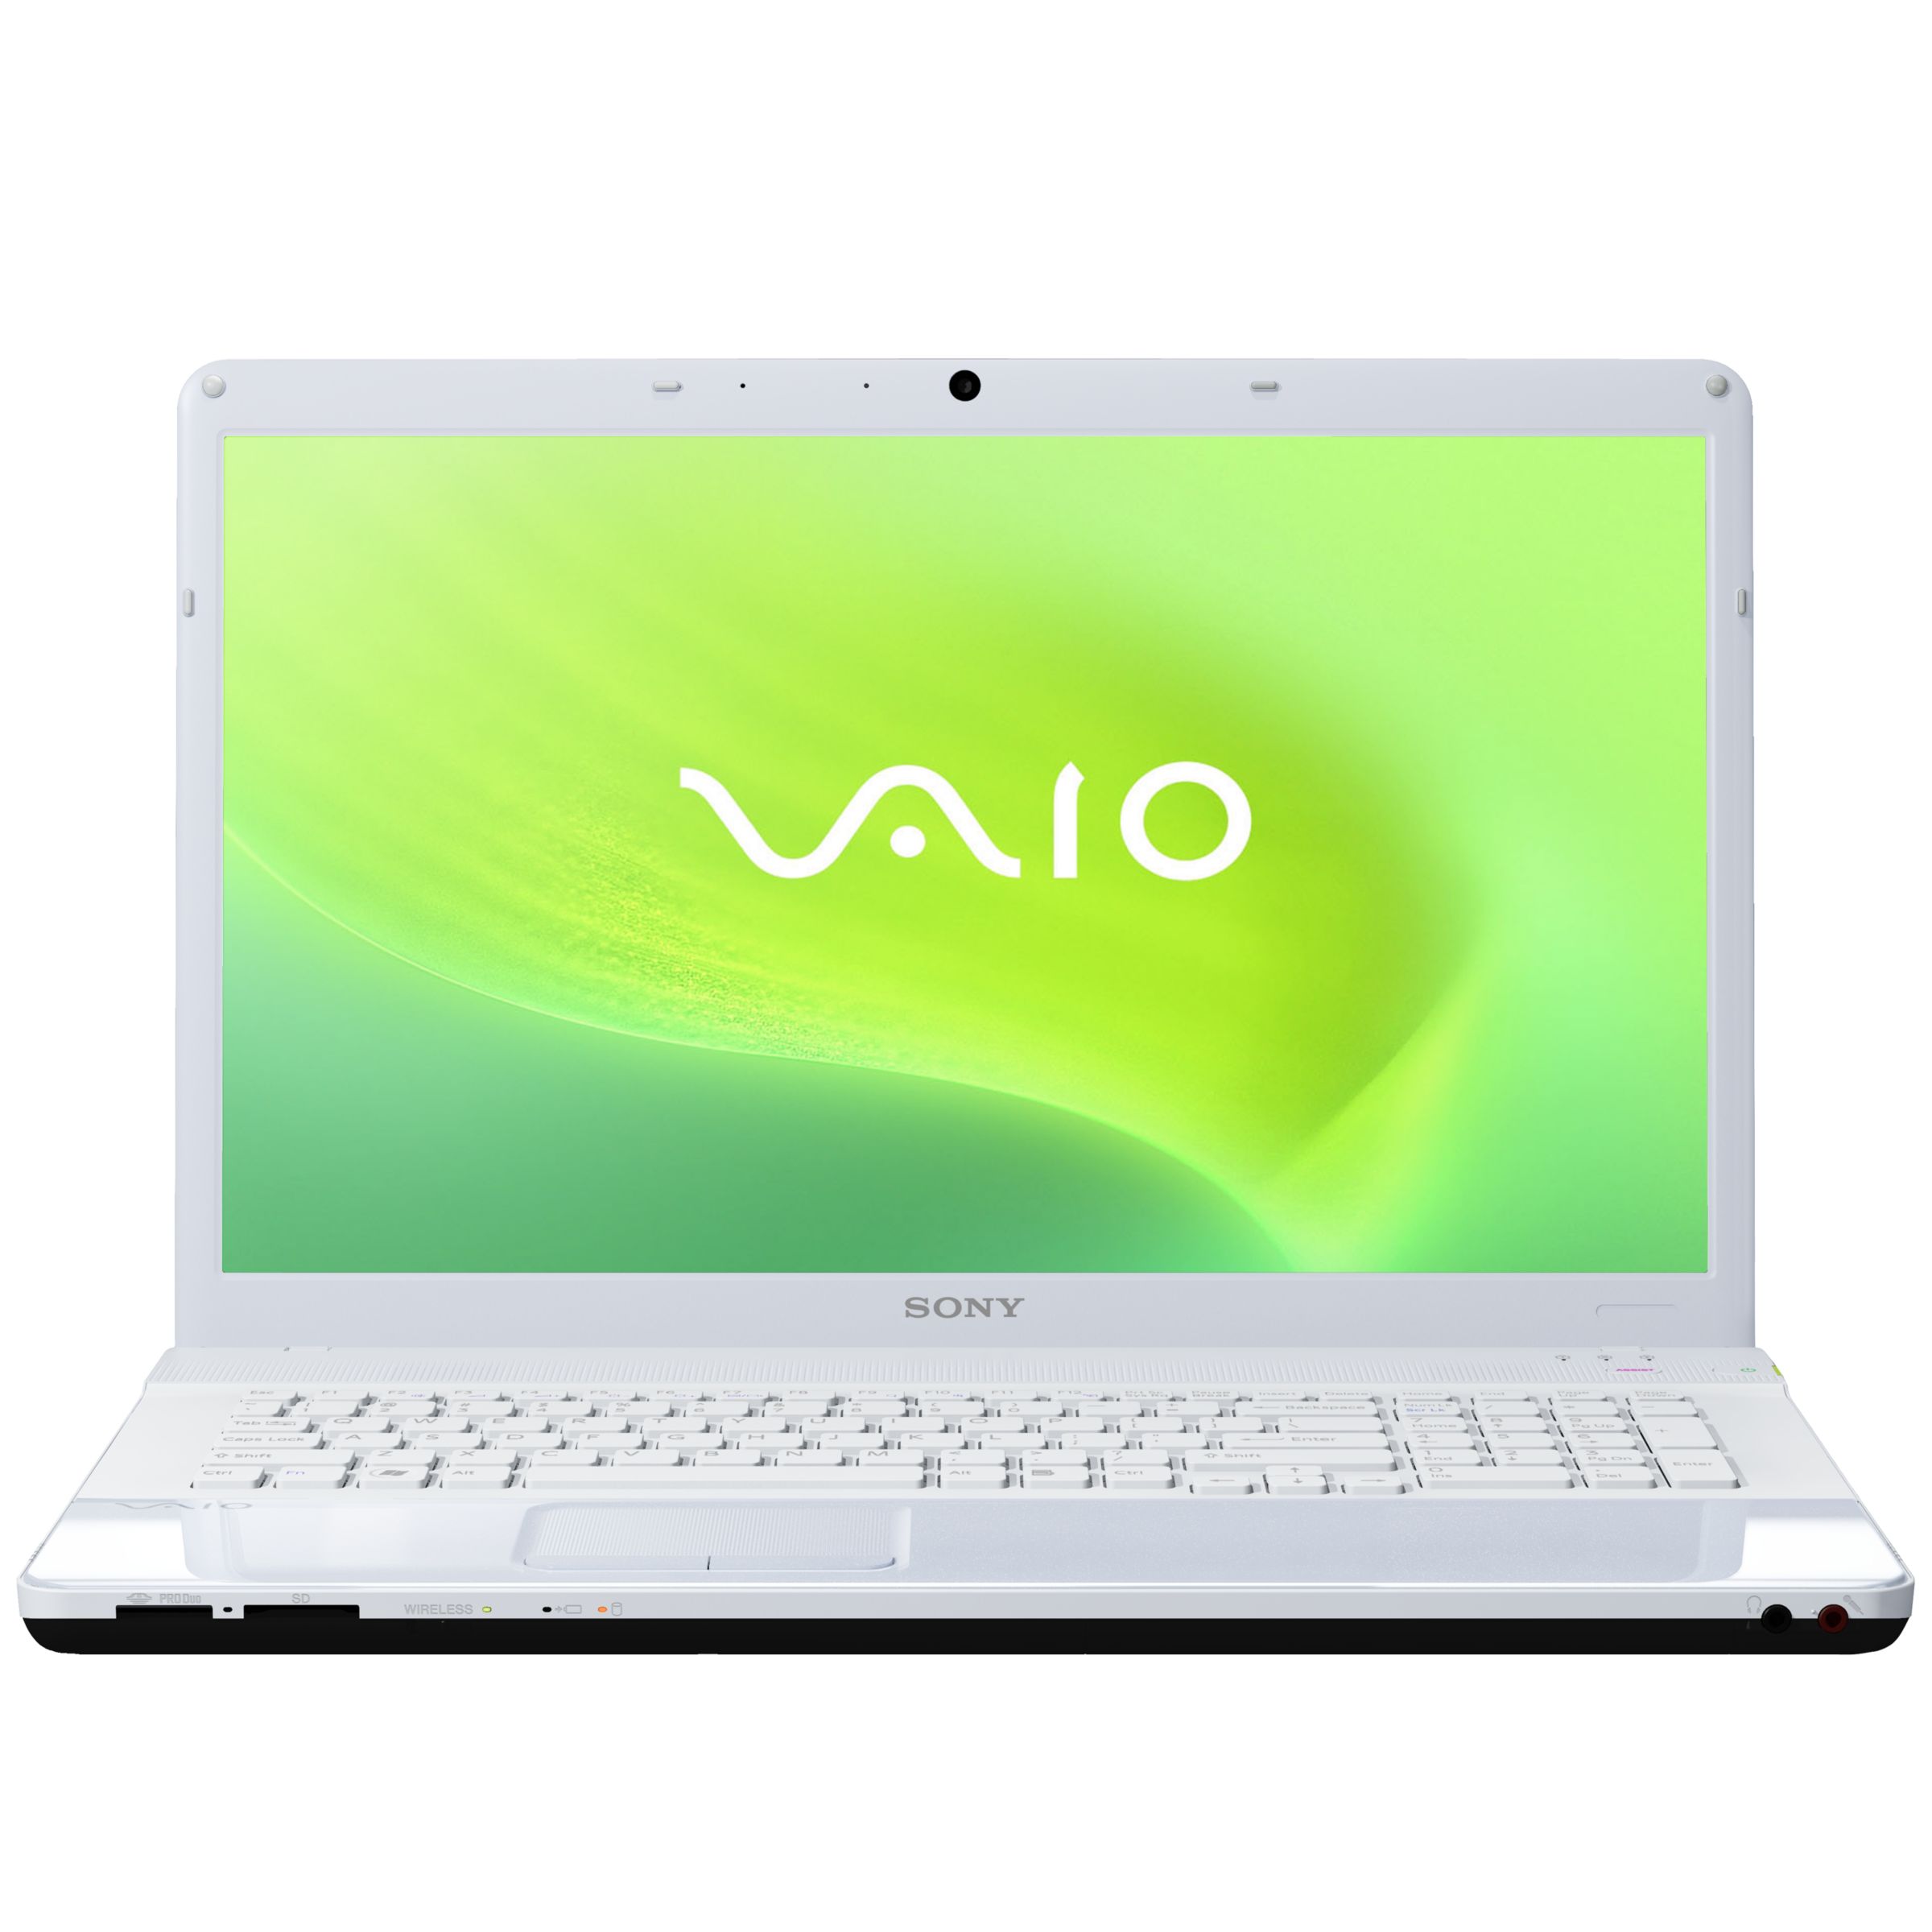 Sony Vaio VPC-EF3E1E/W Laptop, AMD Athlon, 320GB, 2.2GHz, 4GB RAM with 17.3 Inch Display at JohnLewis